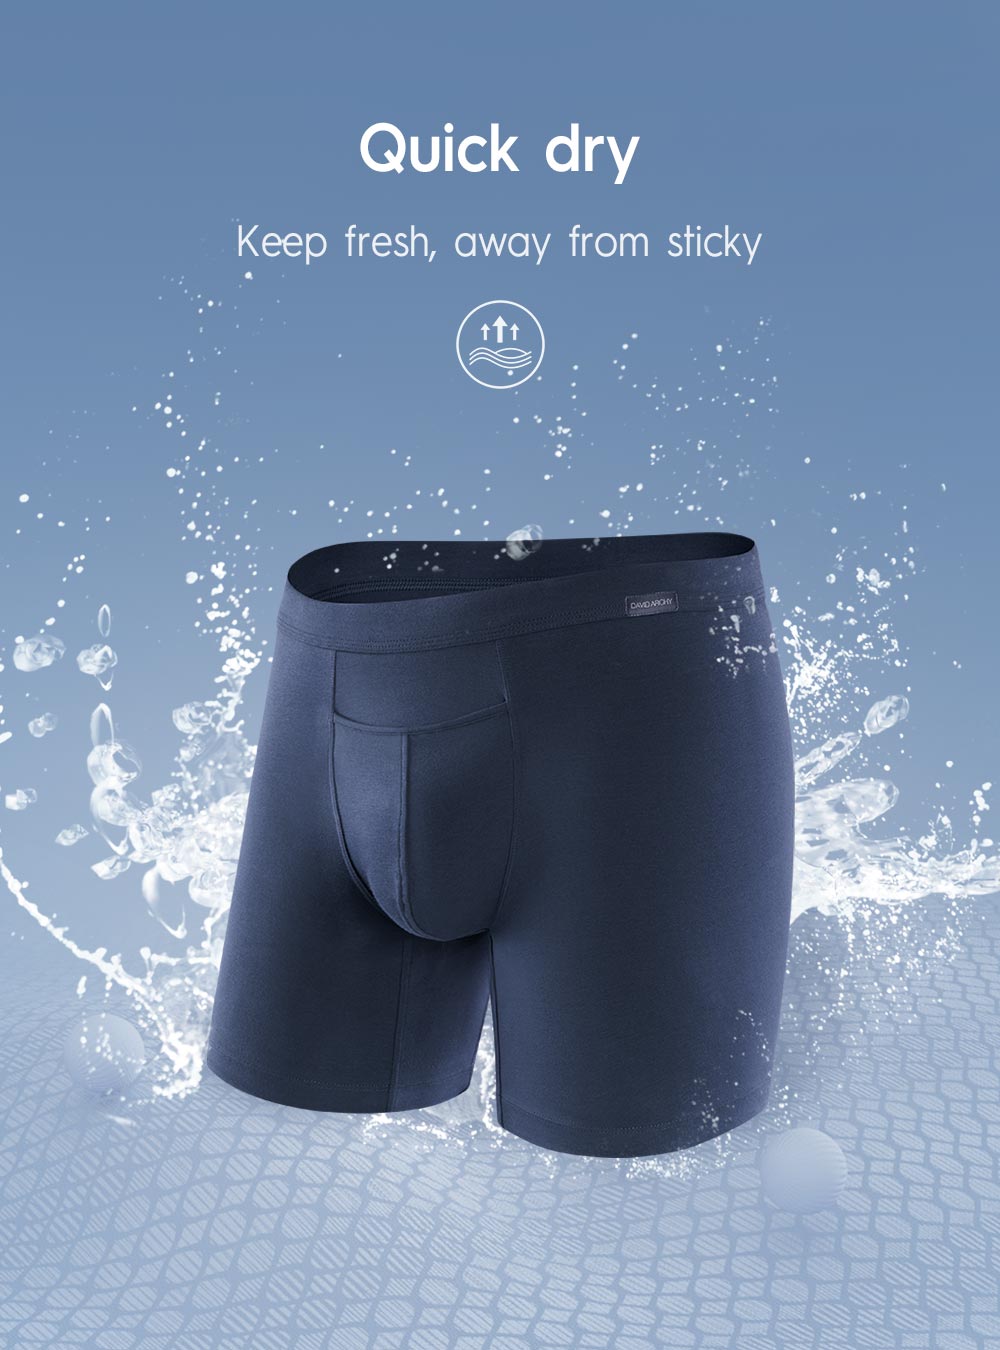 DAVID ARCHY Mens Underwear Mesh Quick Dry Boxer Briefs Sports